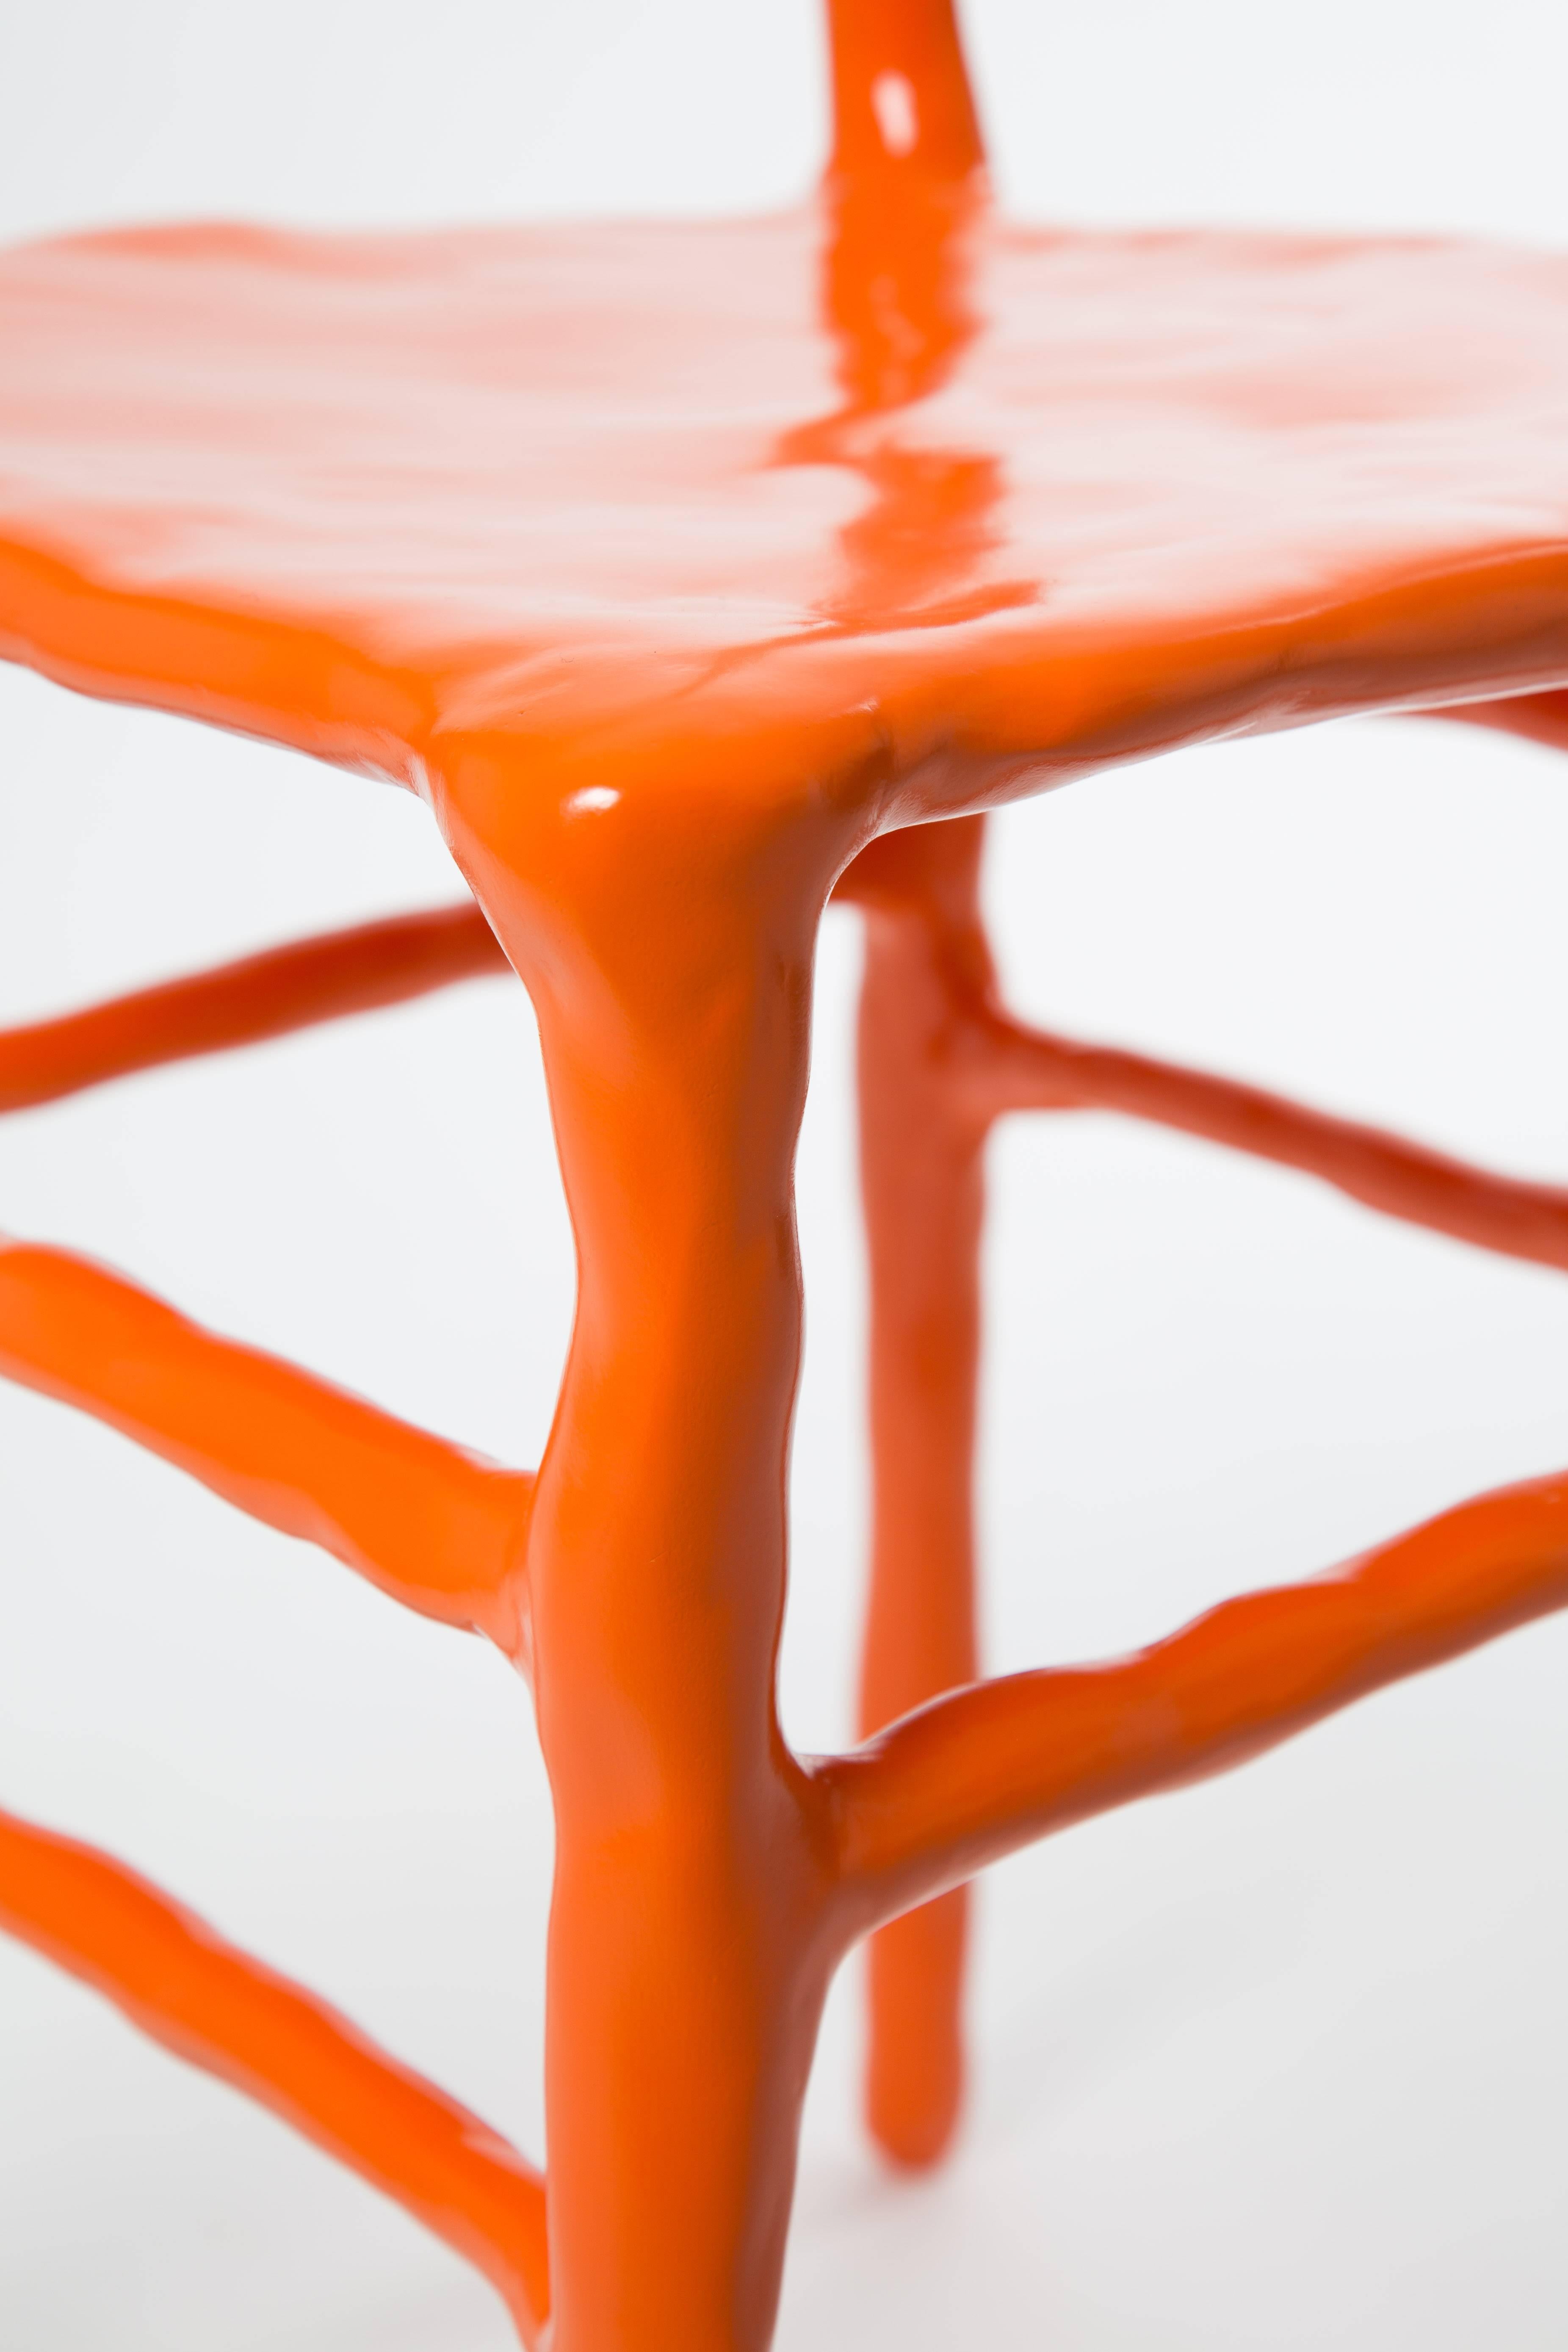 Post-Modern Maarten Baas Clay Chair Limited Edition Basel Chair 2007 Orange For Sale